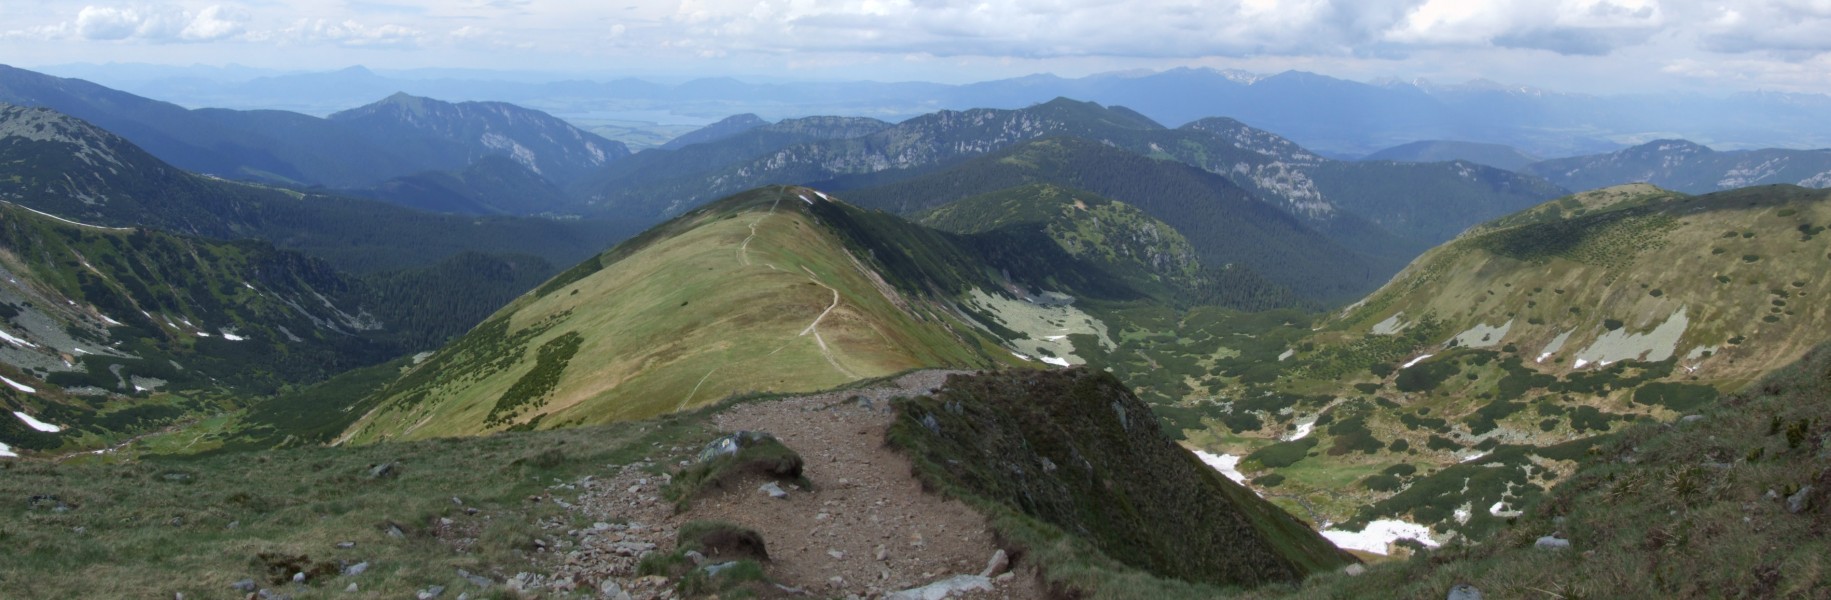 Nizke tatry - panorama from Krúpova hoľa